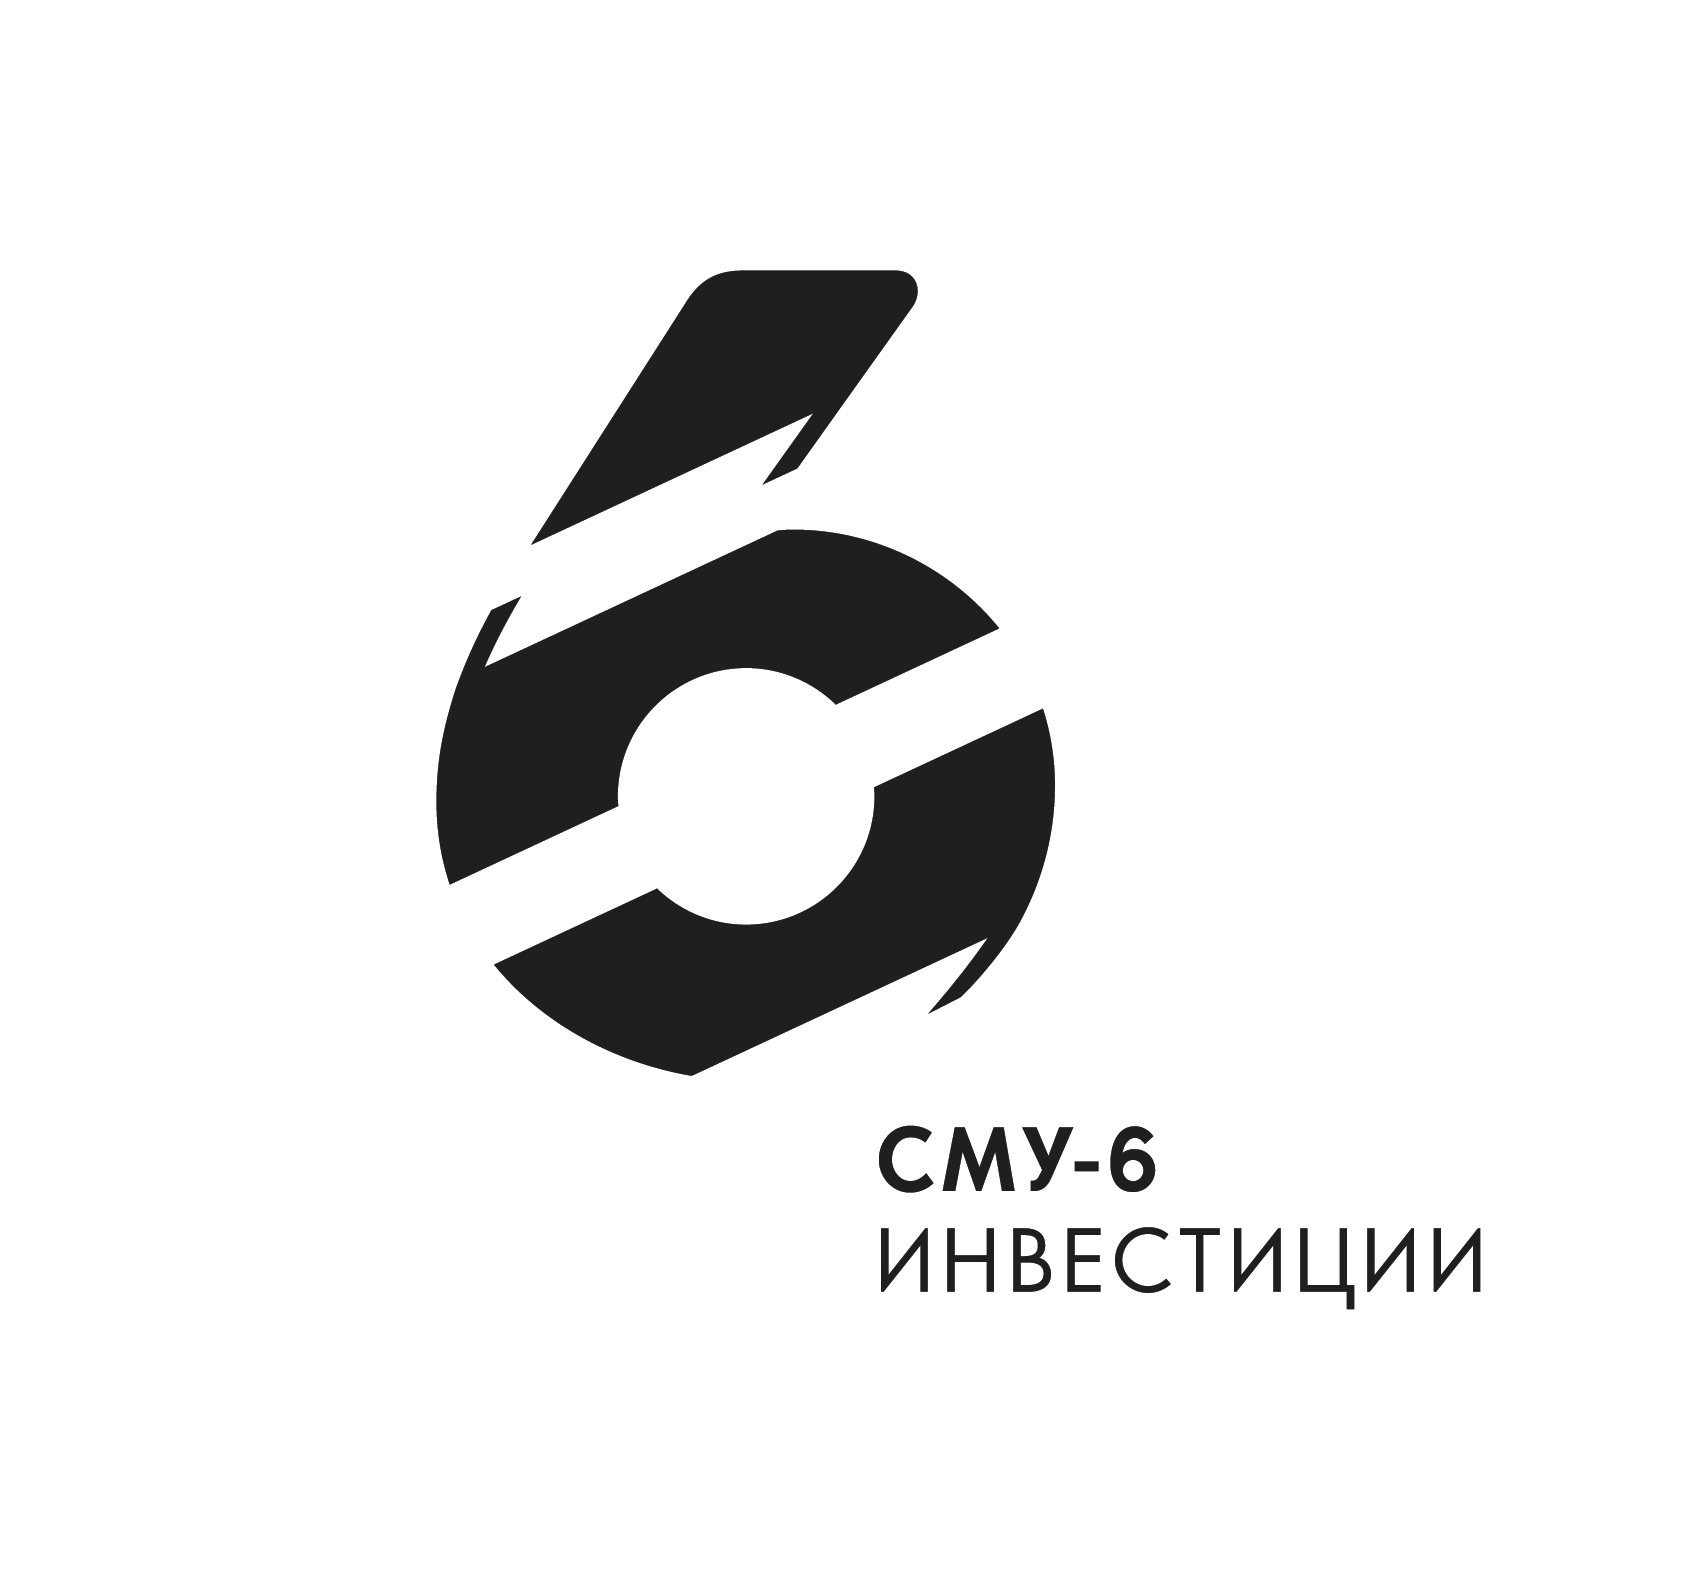 smu6_logo_cmyk_black.jpg